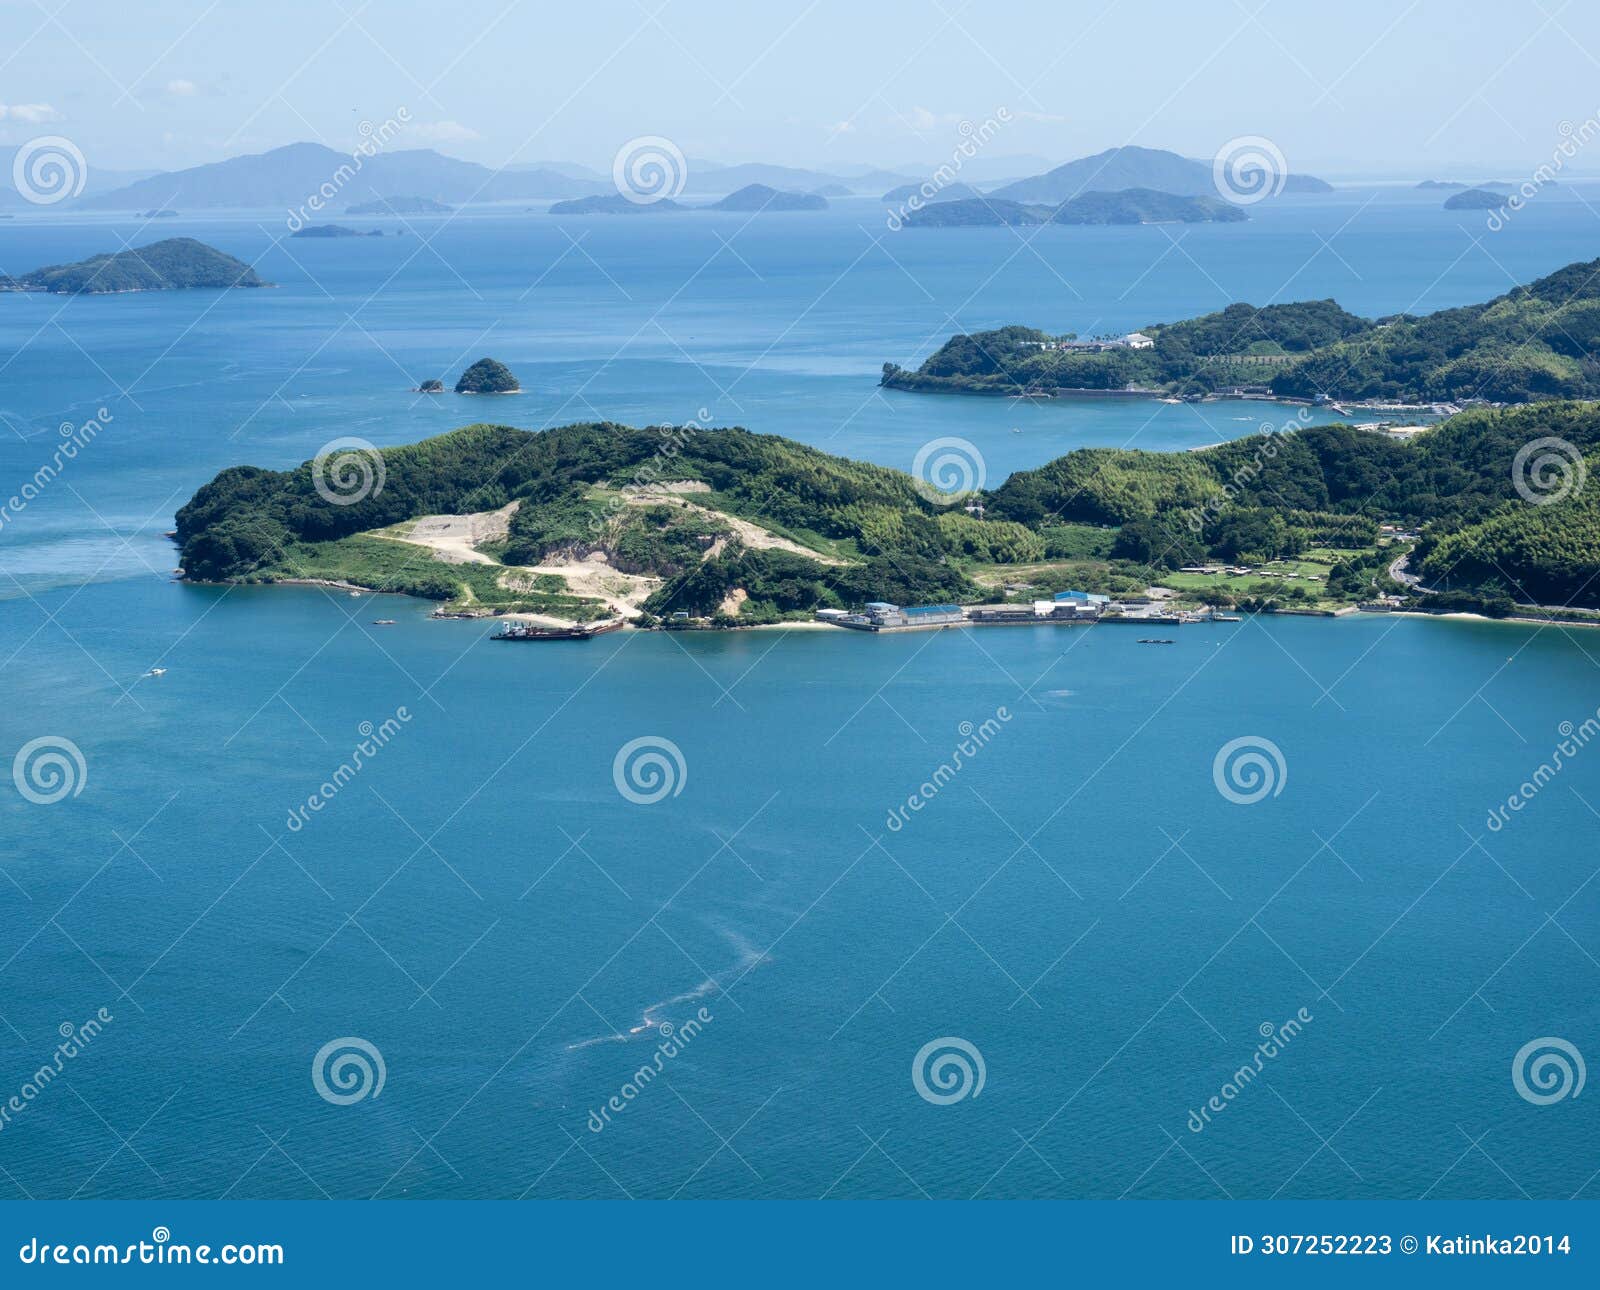 scenic view of suo oshima island and seto inland sea from iinoyama viewpoint